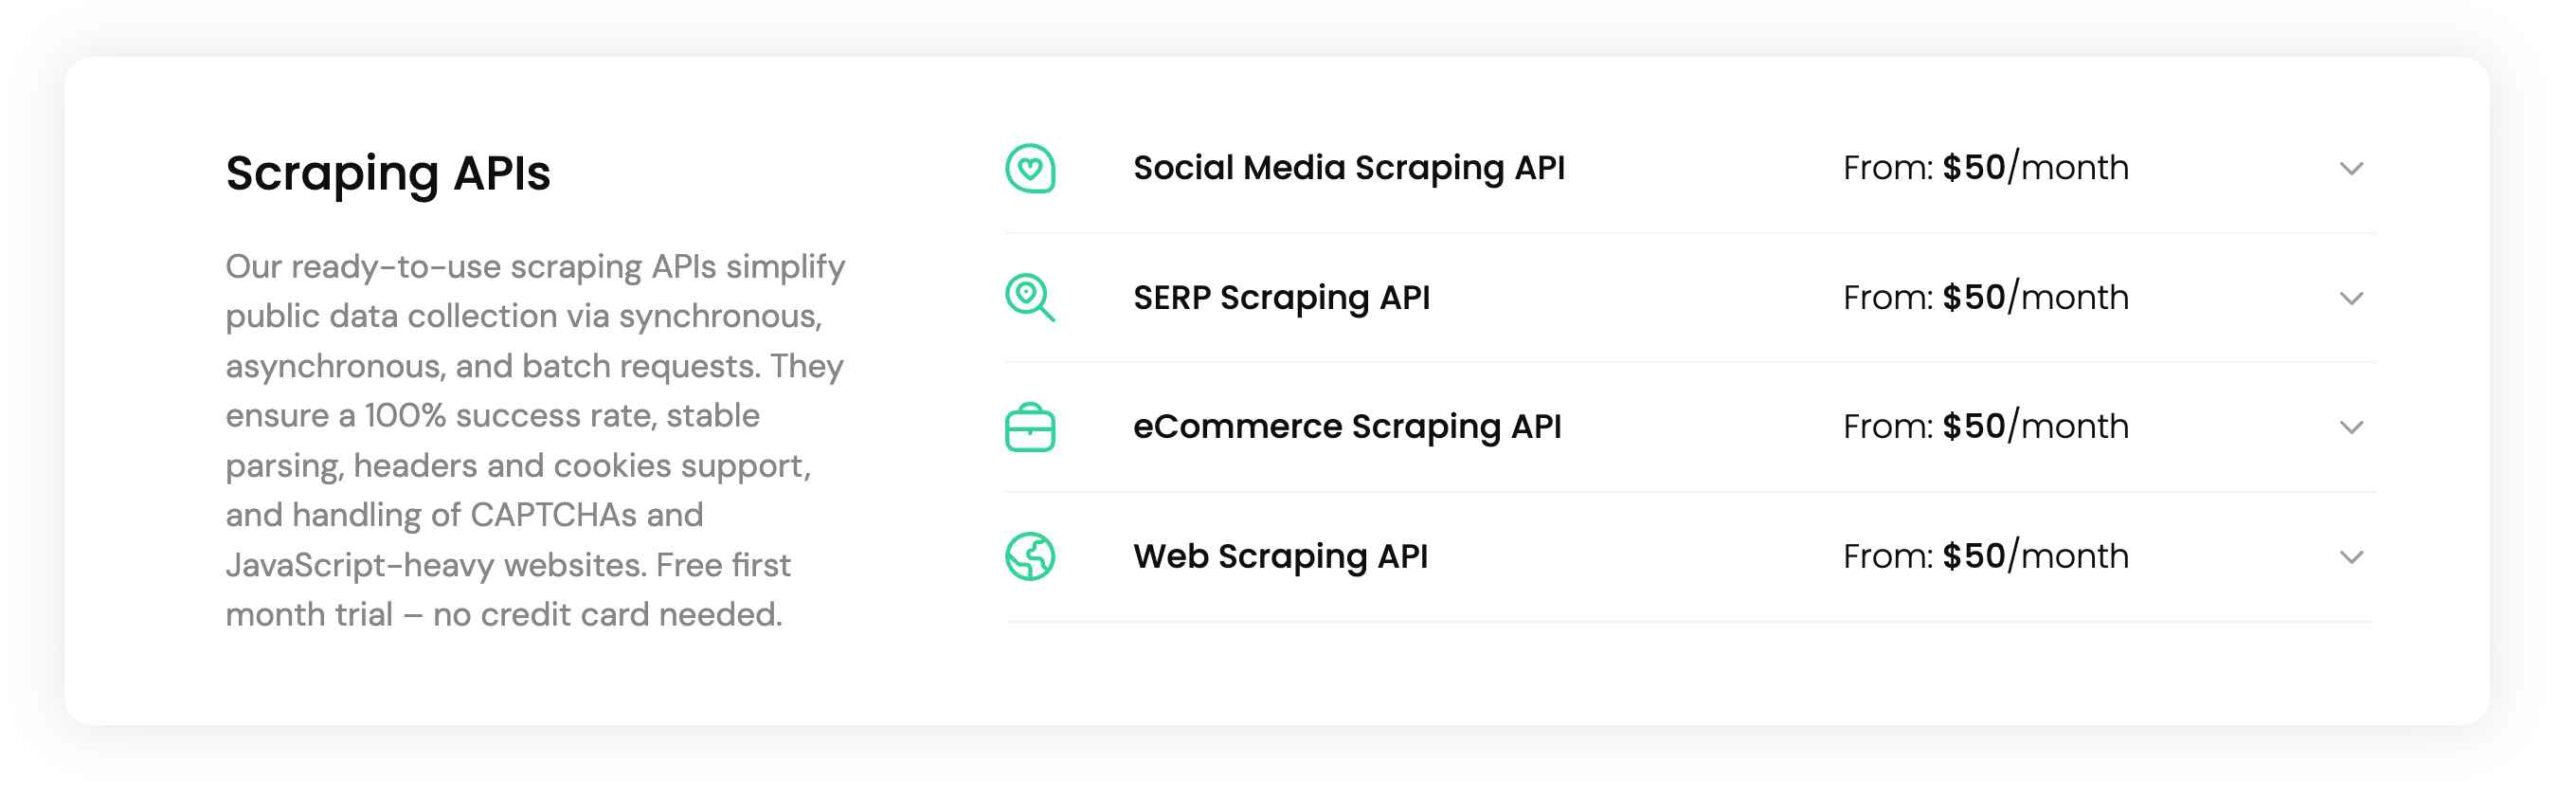 SmartProxy Scraping APIs Pricing